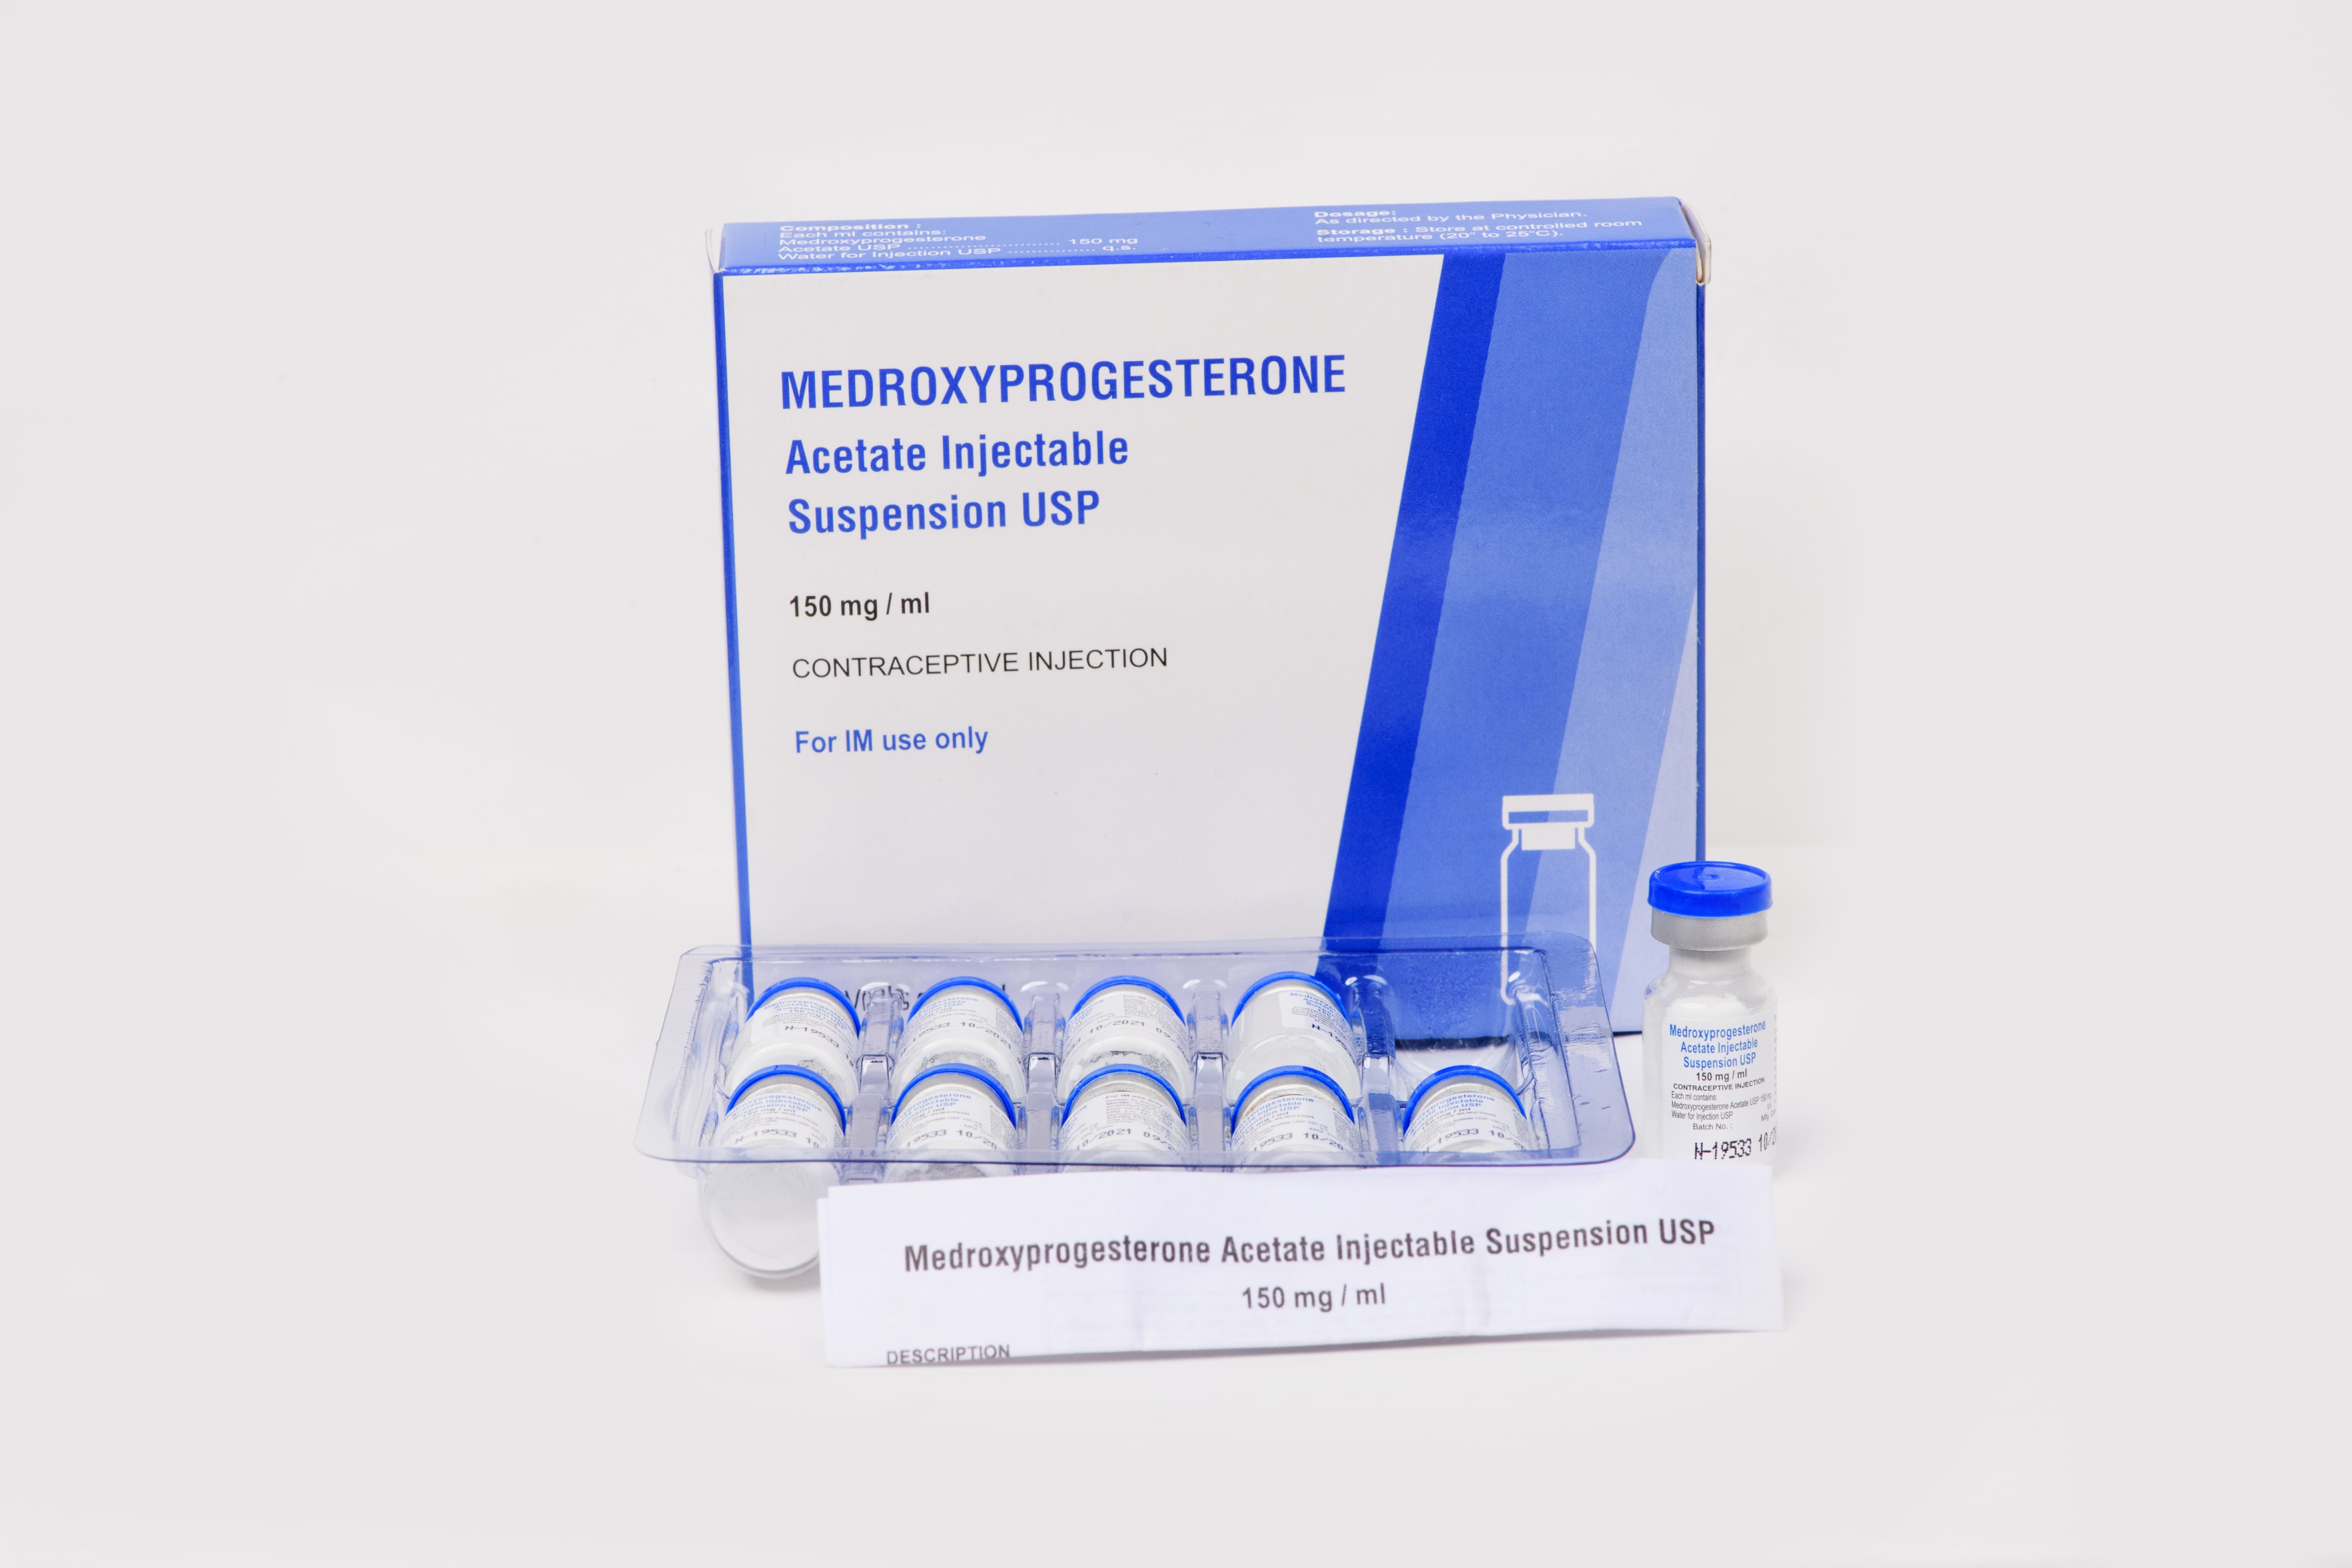 Medroxyprogesterone acetate suspension injection